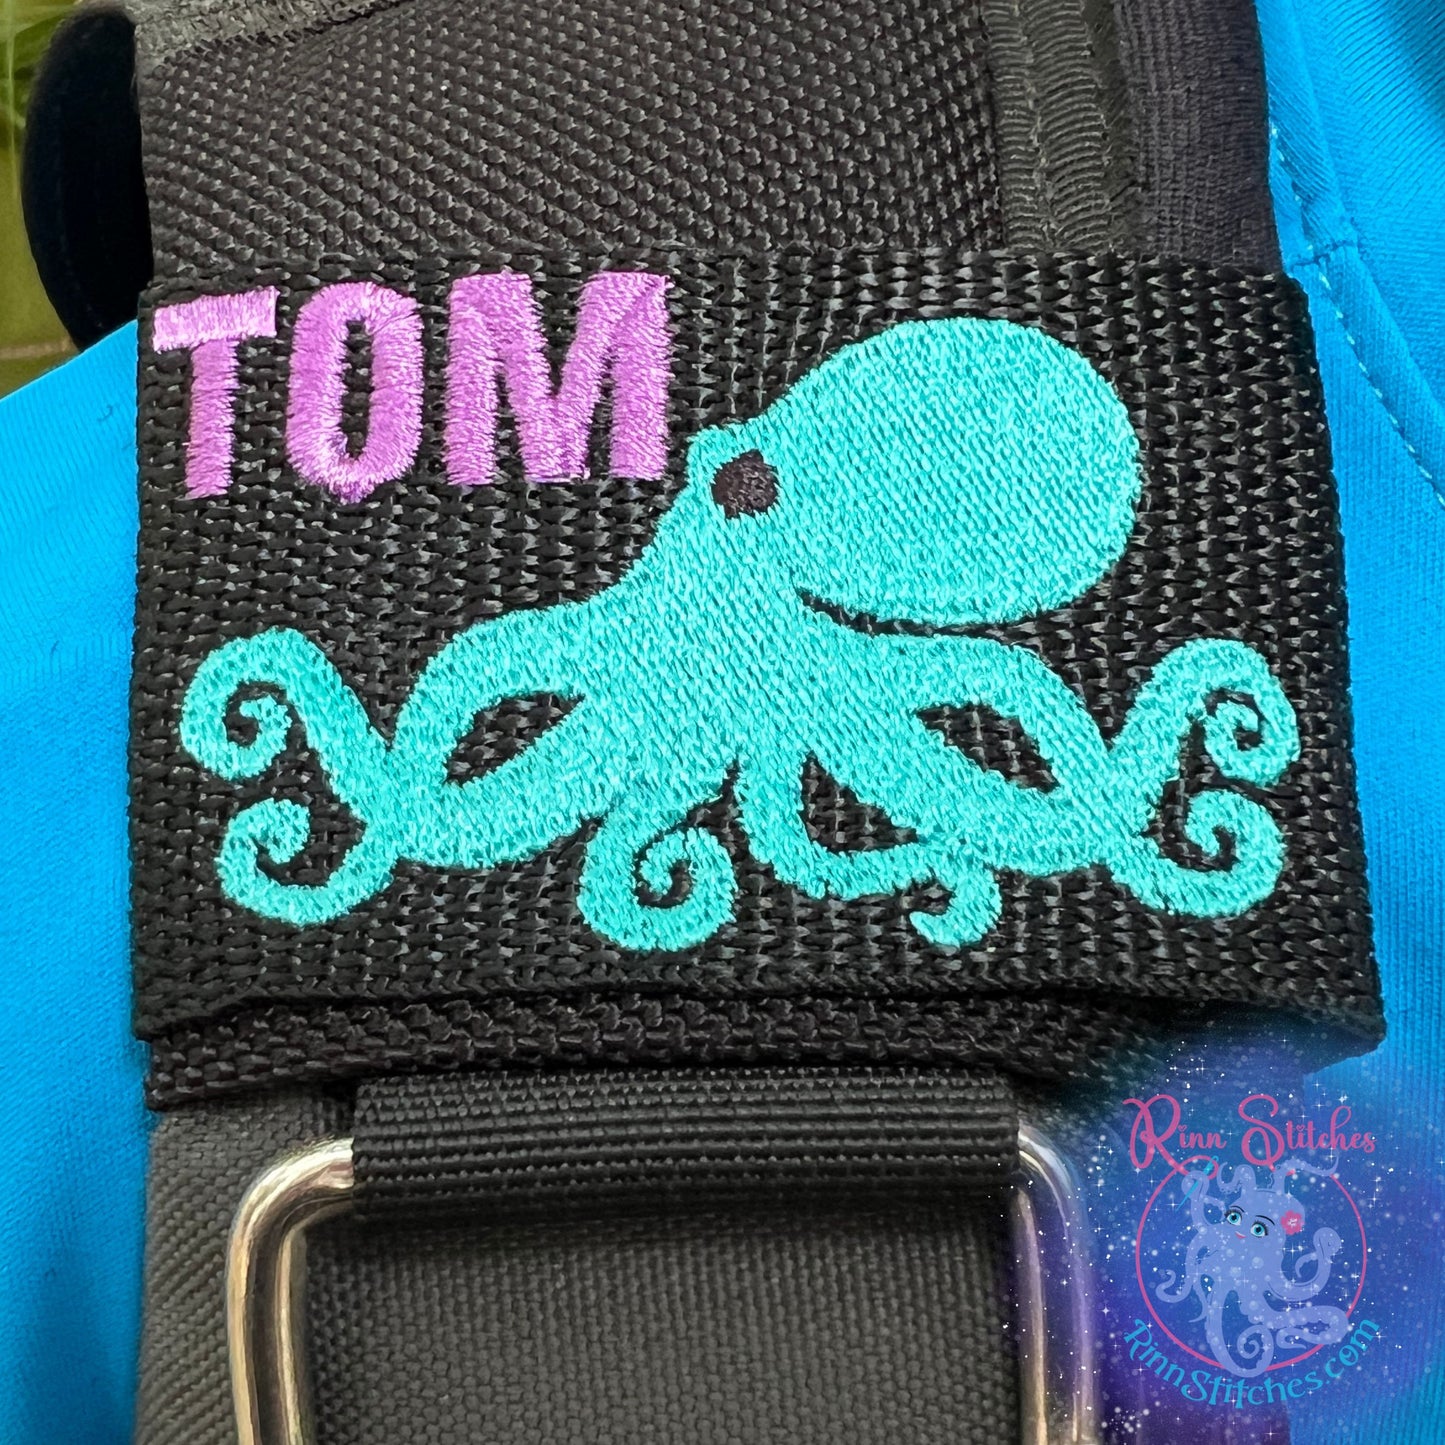 Tako (Octopus) | Personalized & Customizable Scuba Diver BCD Identification Tag | Made on Maui | Scuba Diver Gift | Rinn Stitches Creative & Unique Embroidery